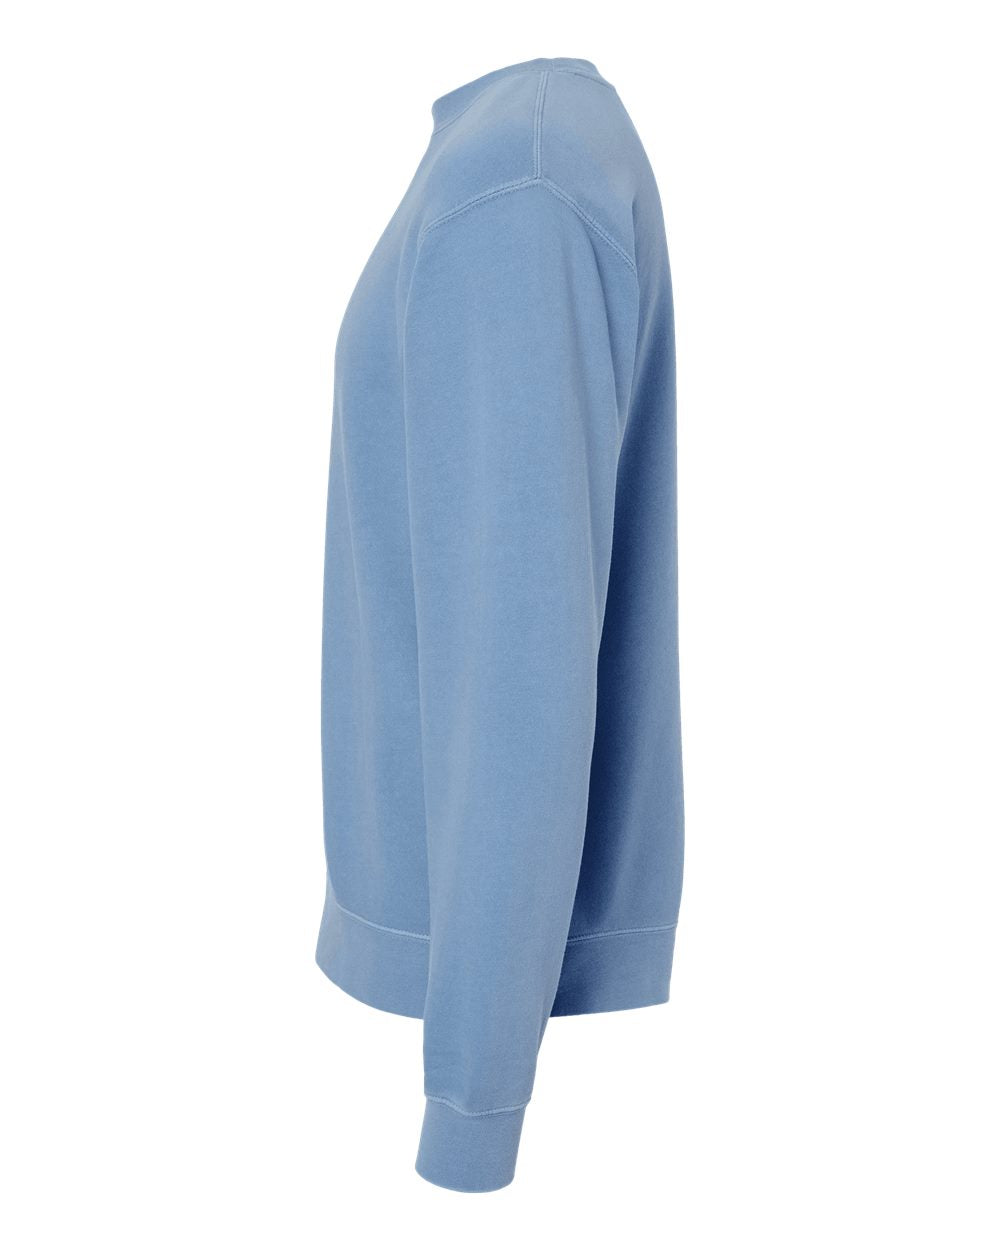 Independent Trading Co. Unisex Midweight Pigment-Dyed Crewneck Sweatshirt PRM3500 #color_Pigment Light Blue